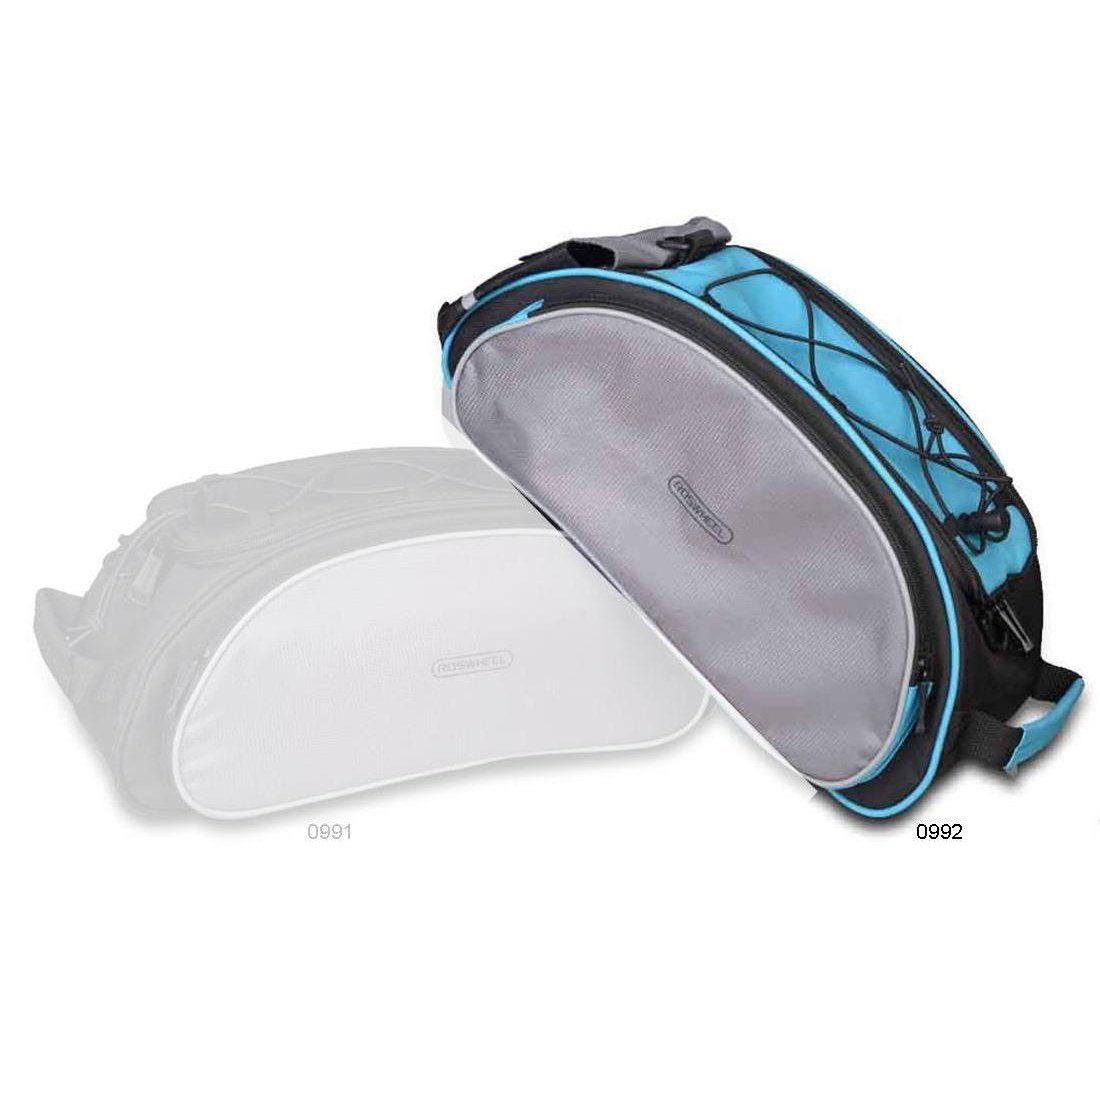 Roswheel SAHOO 13L Rack Top Bag - Blue/Grey, Velcro Attach, 4 Compartments